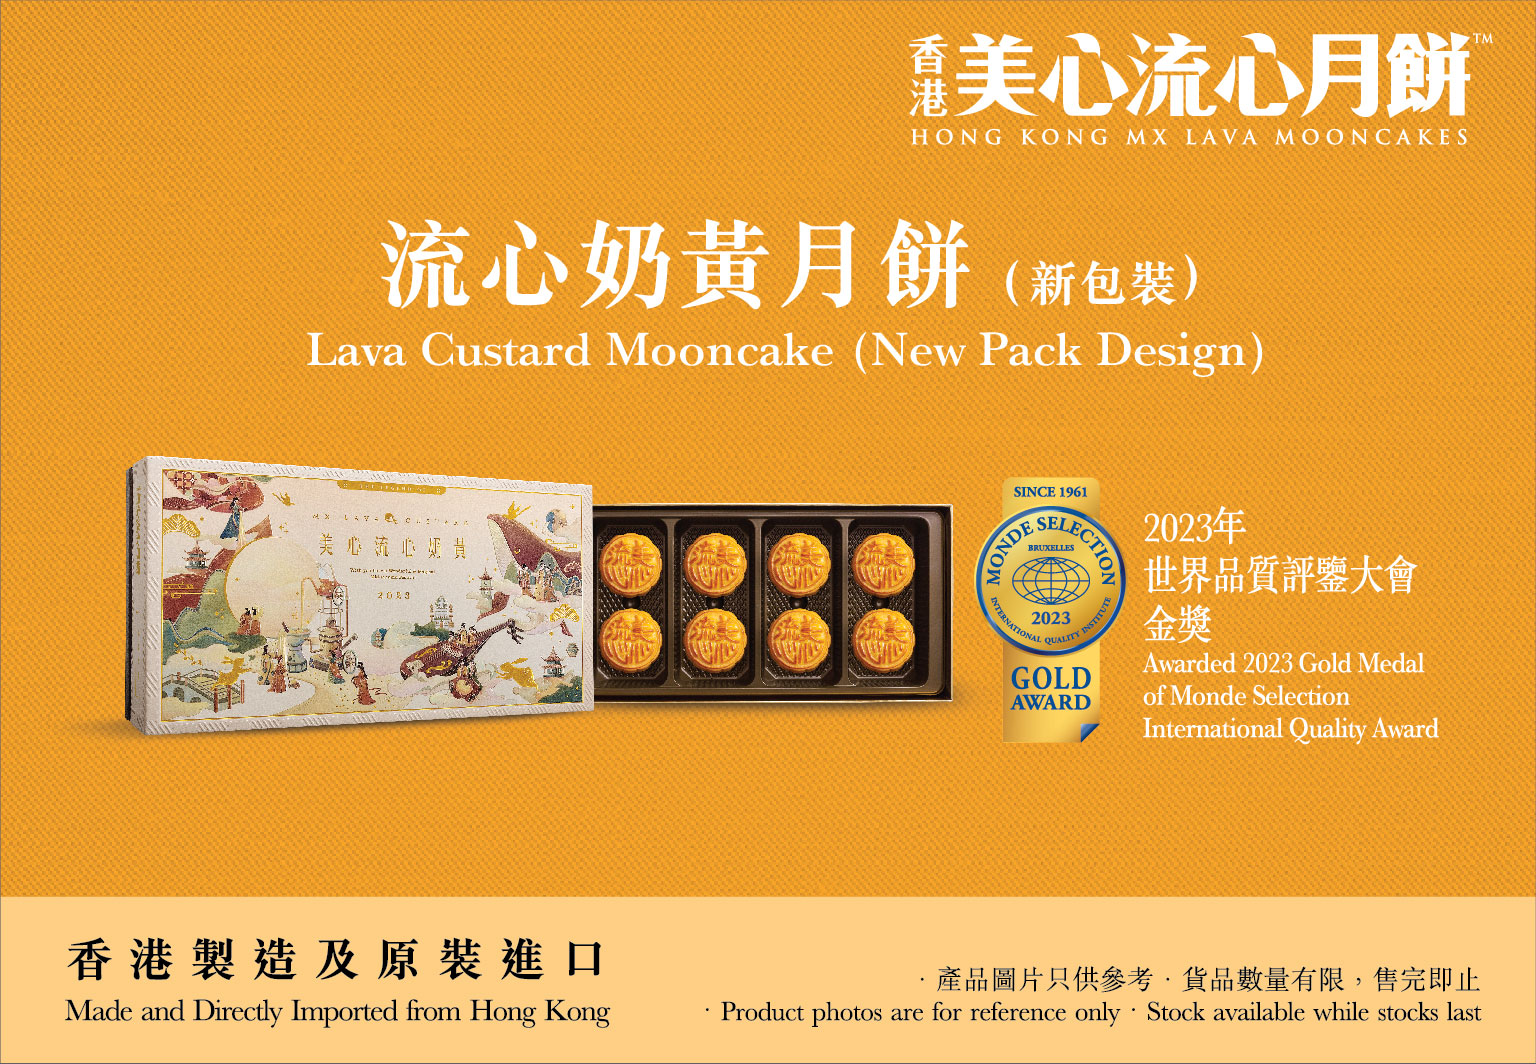 KMX-Lava-Custard-Mooncake-Monde-Selection-Award